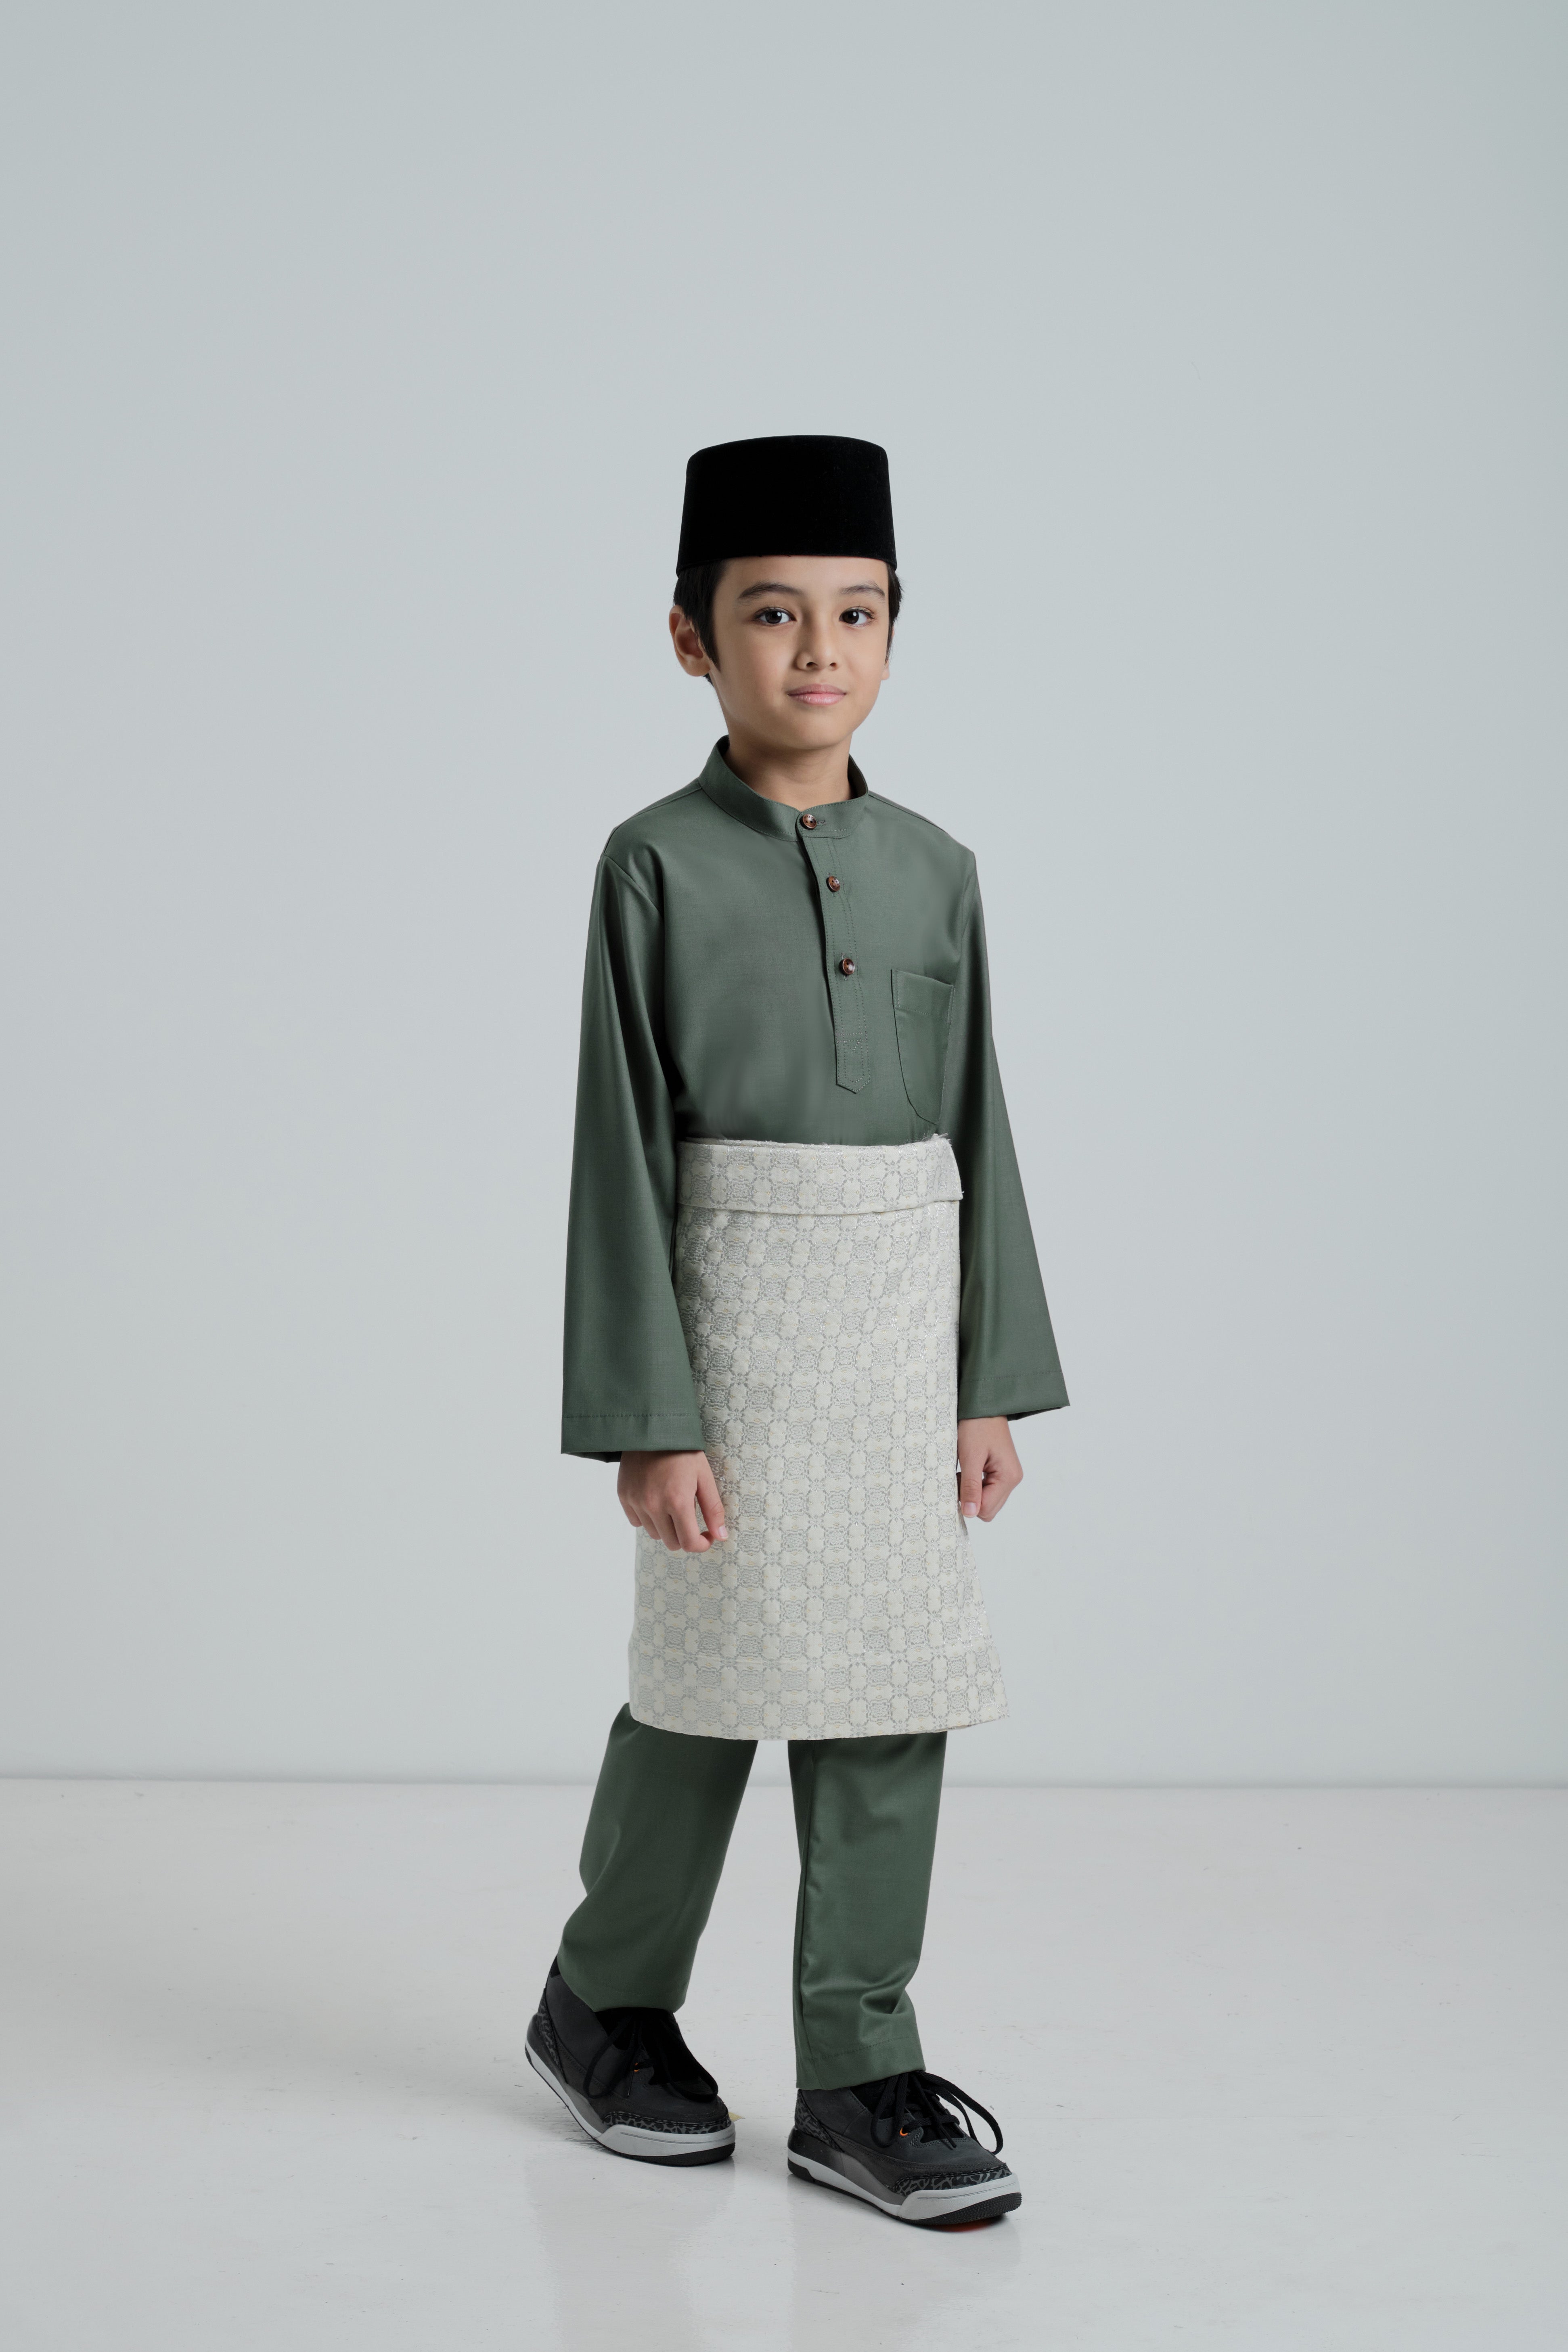 Patawali Boys Baju Melayu Cekak Musang - Pickle Green